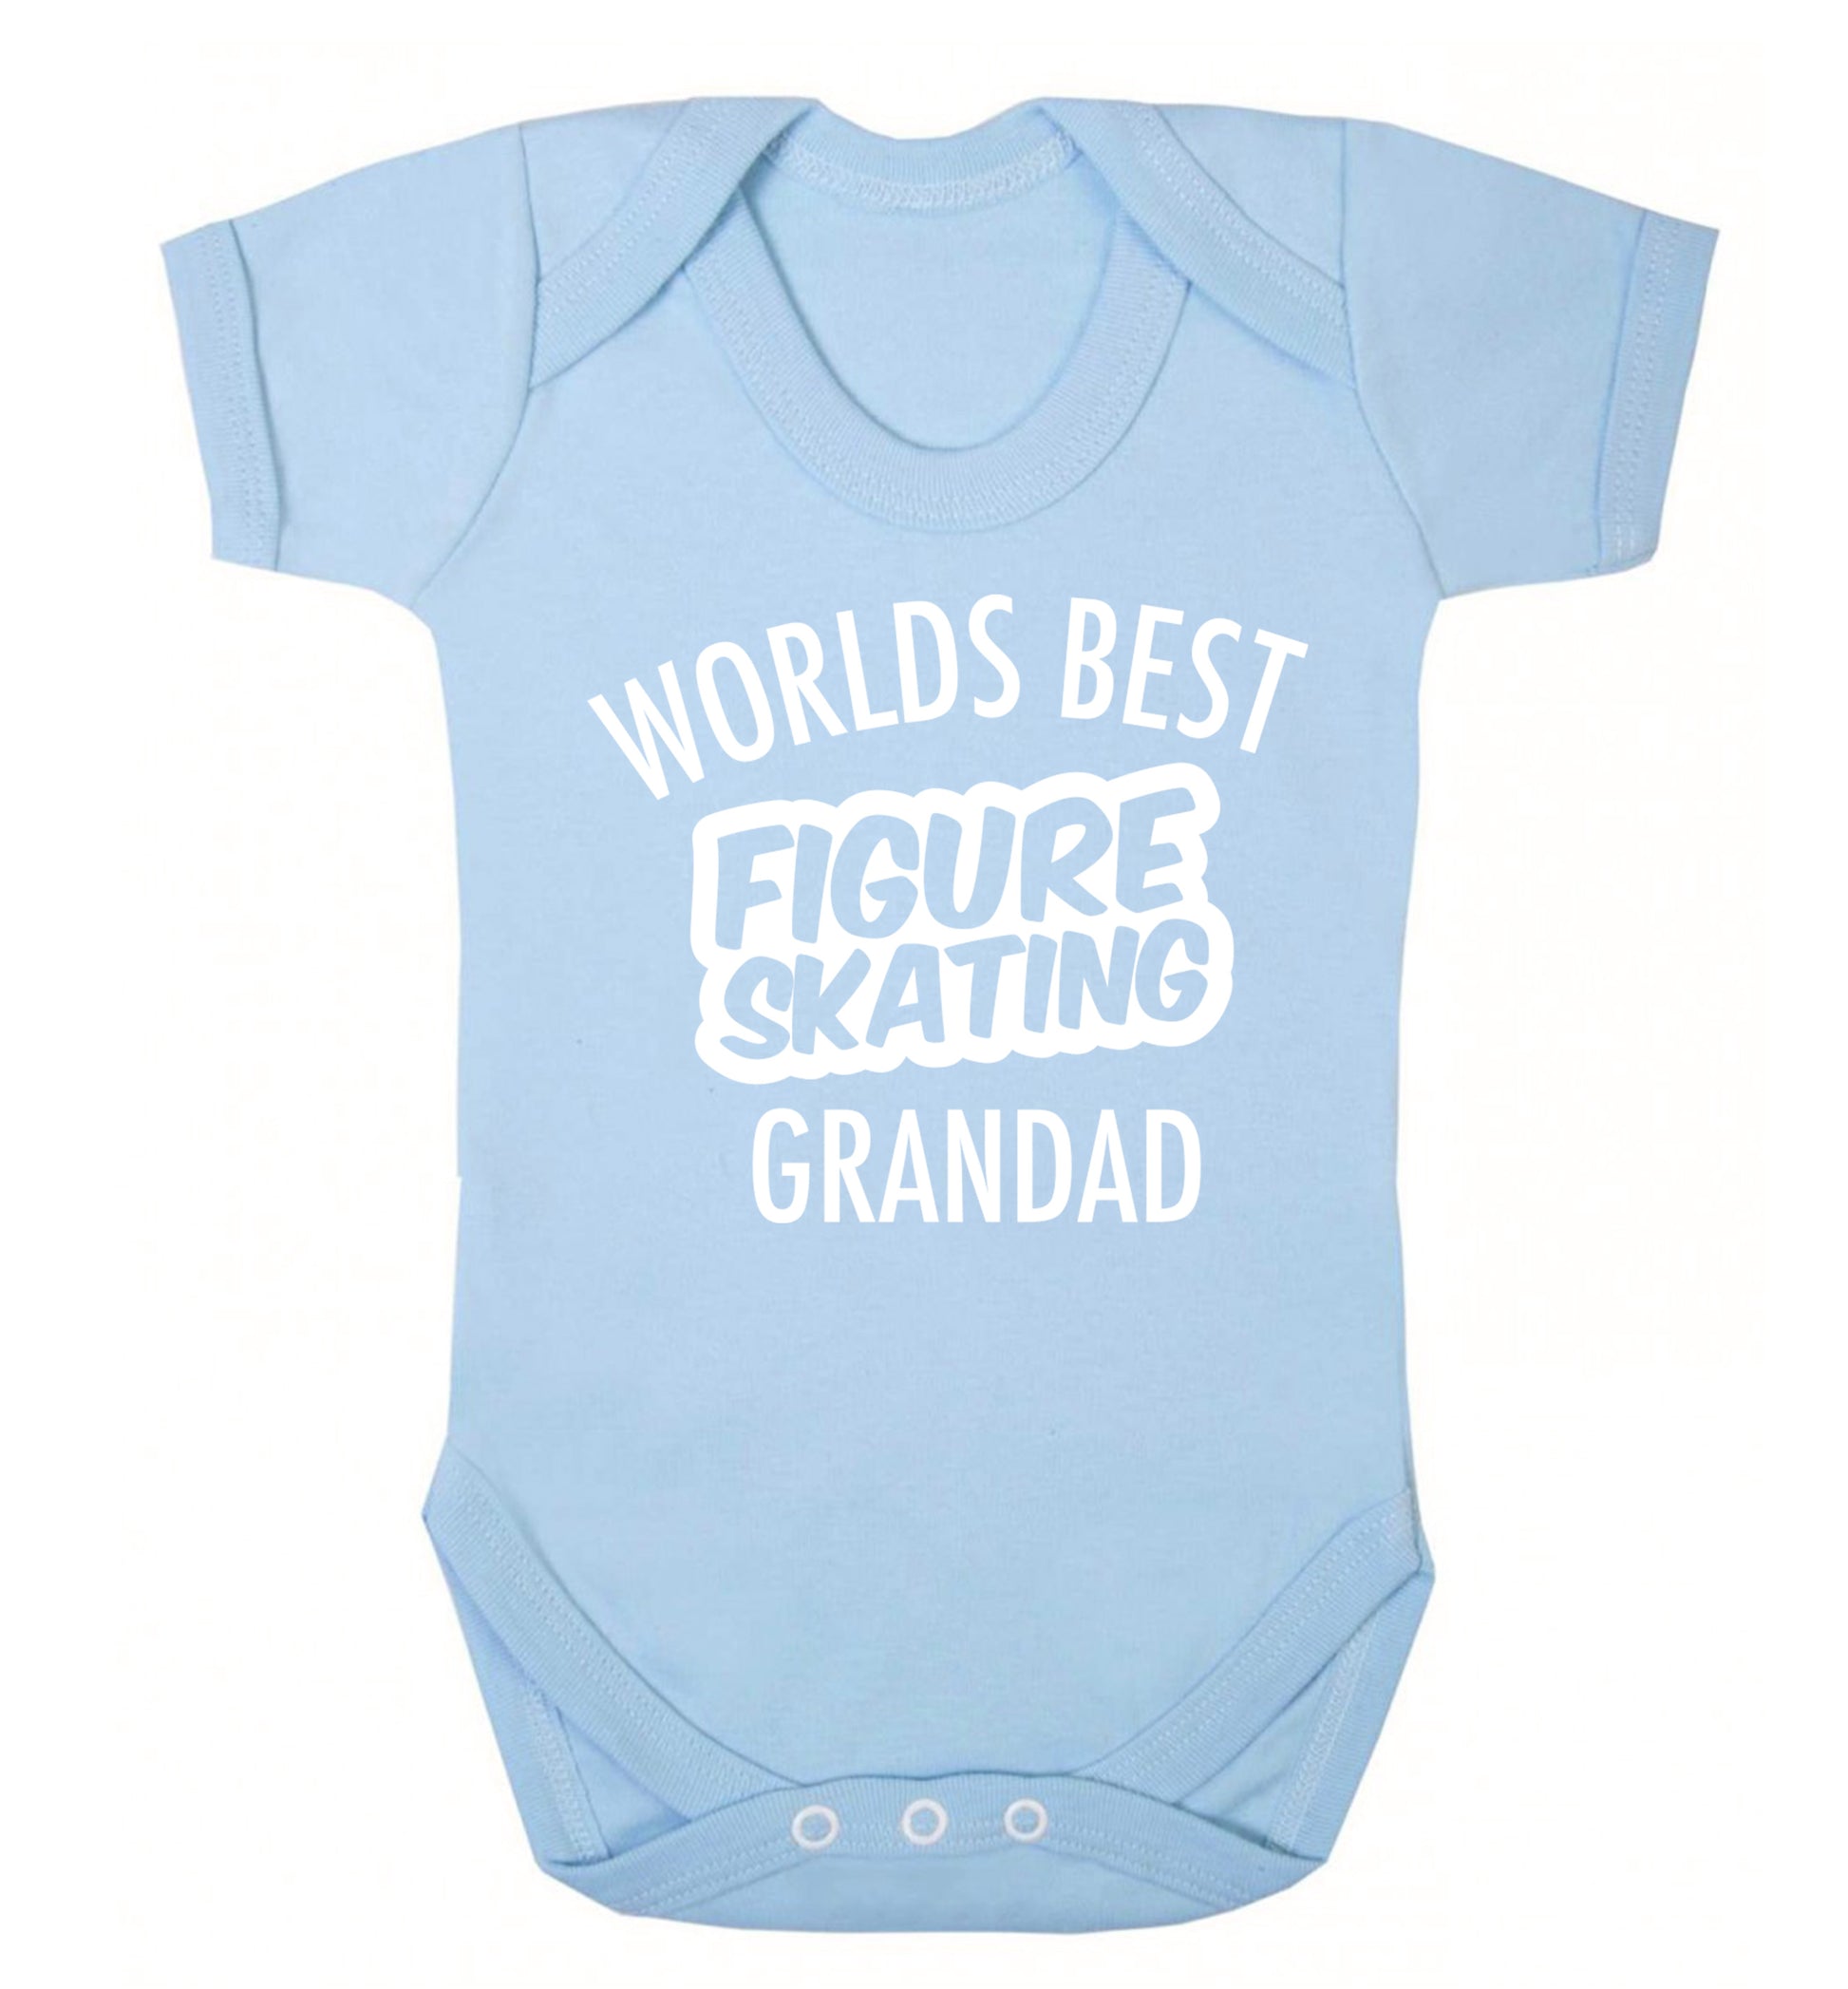 Worlds best figure skating grandad Baby Vest pale blue 18-24 months